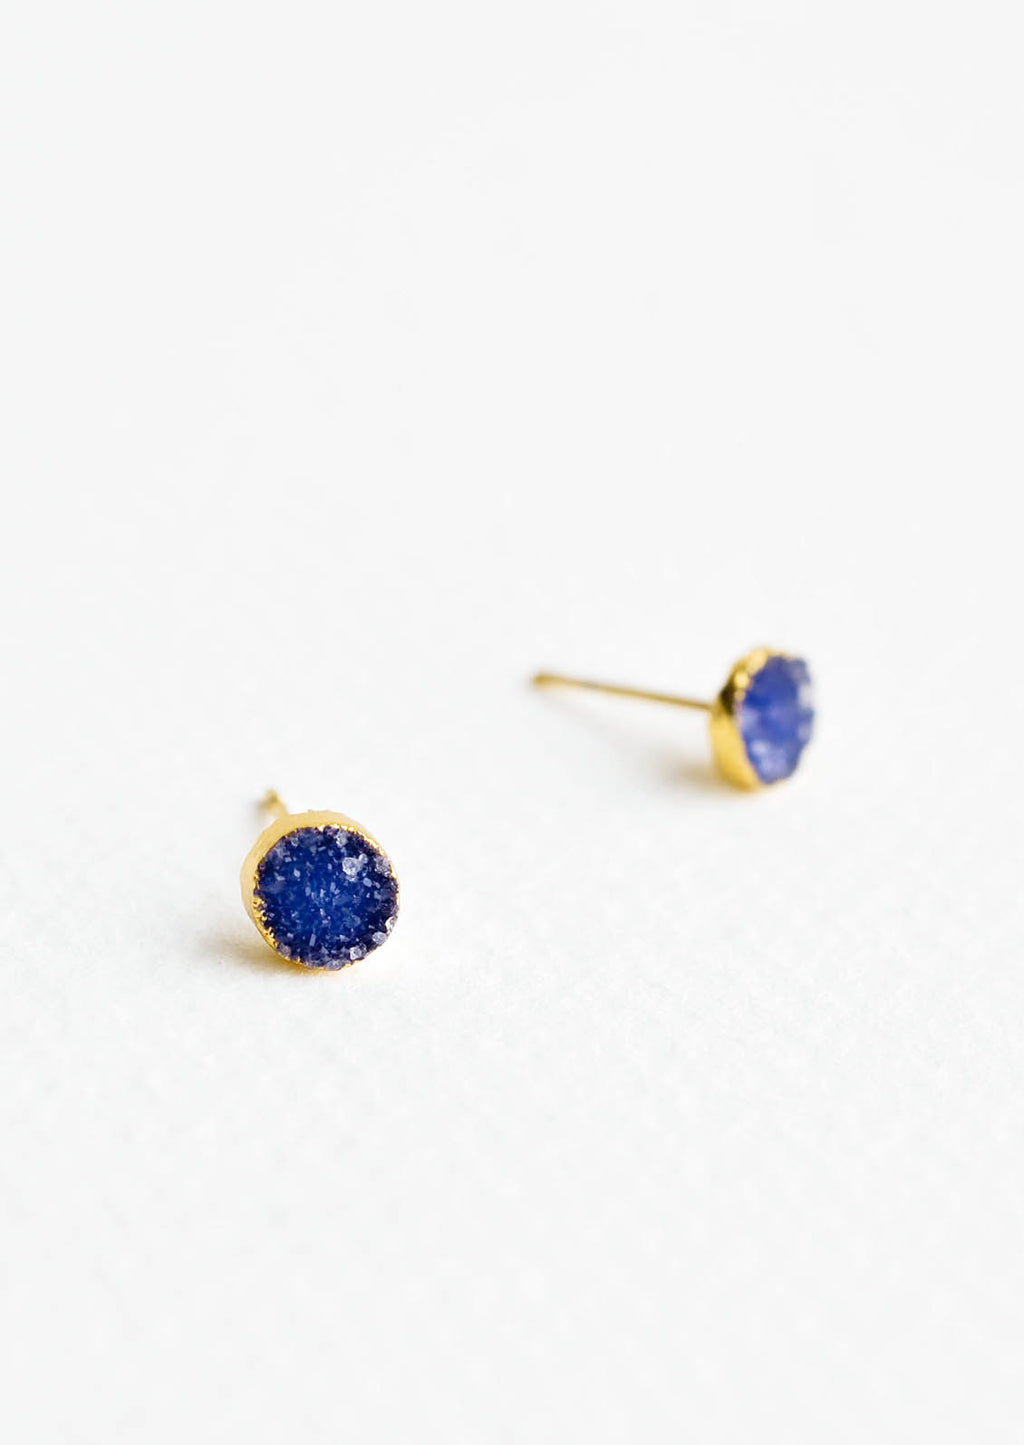 Neptune: Textured blue gemstone studs with gold surround.